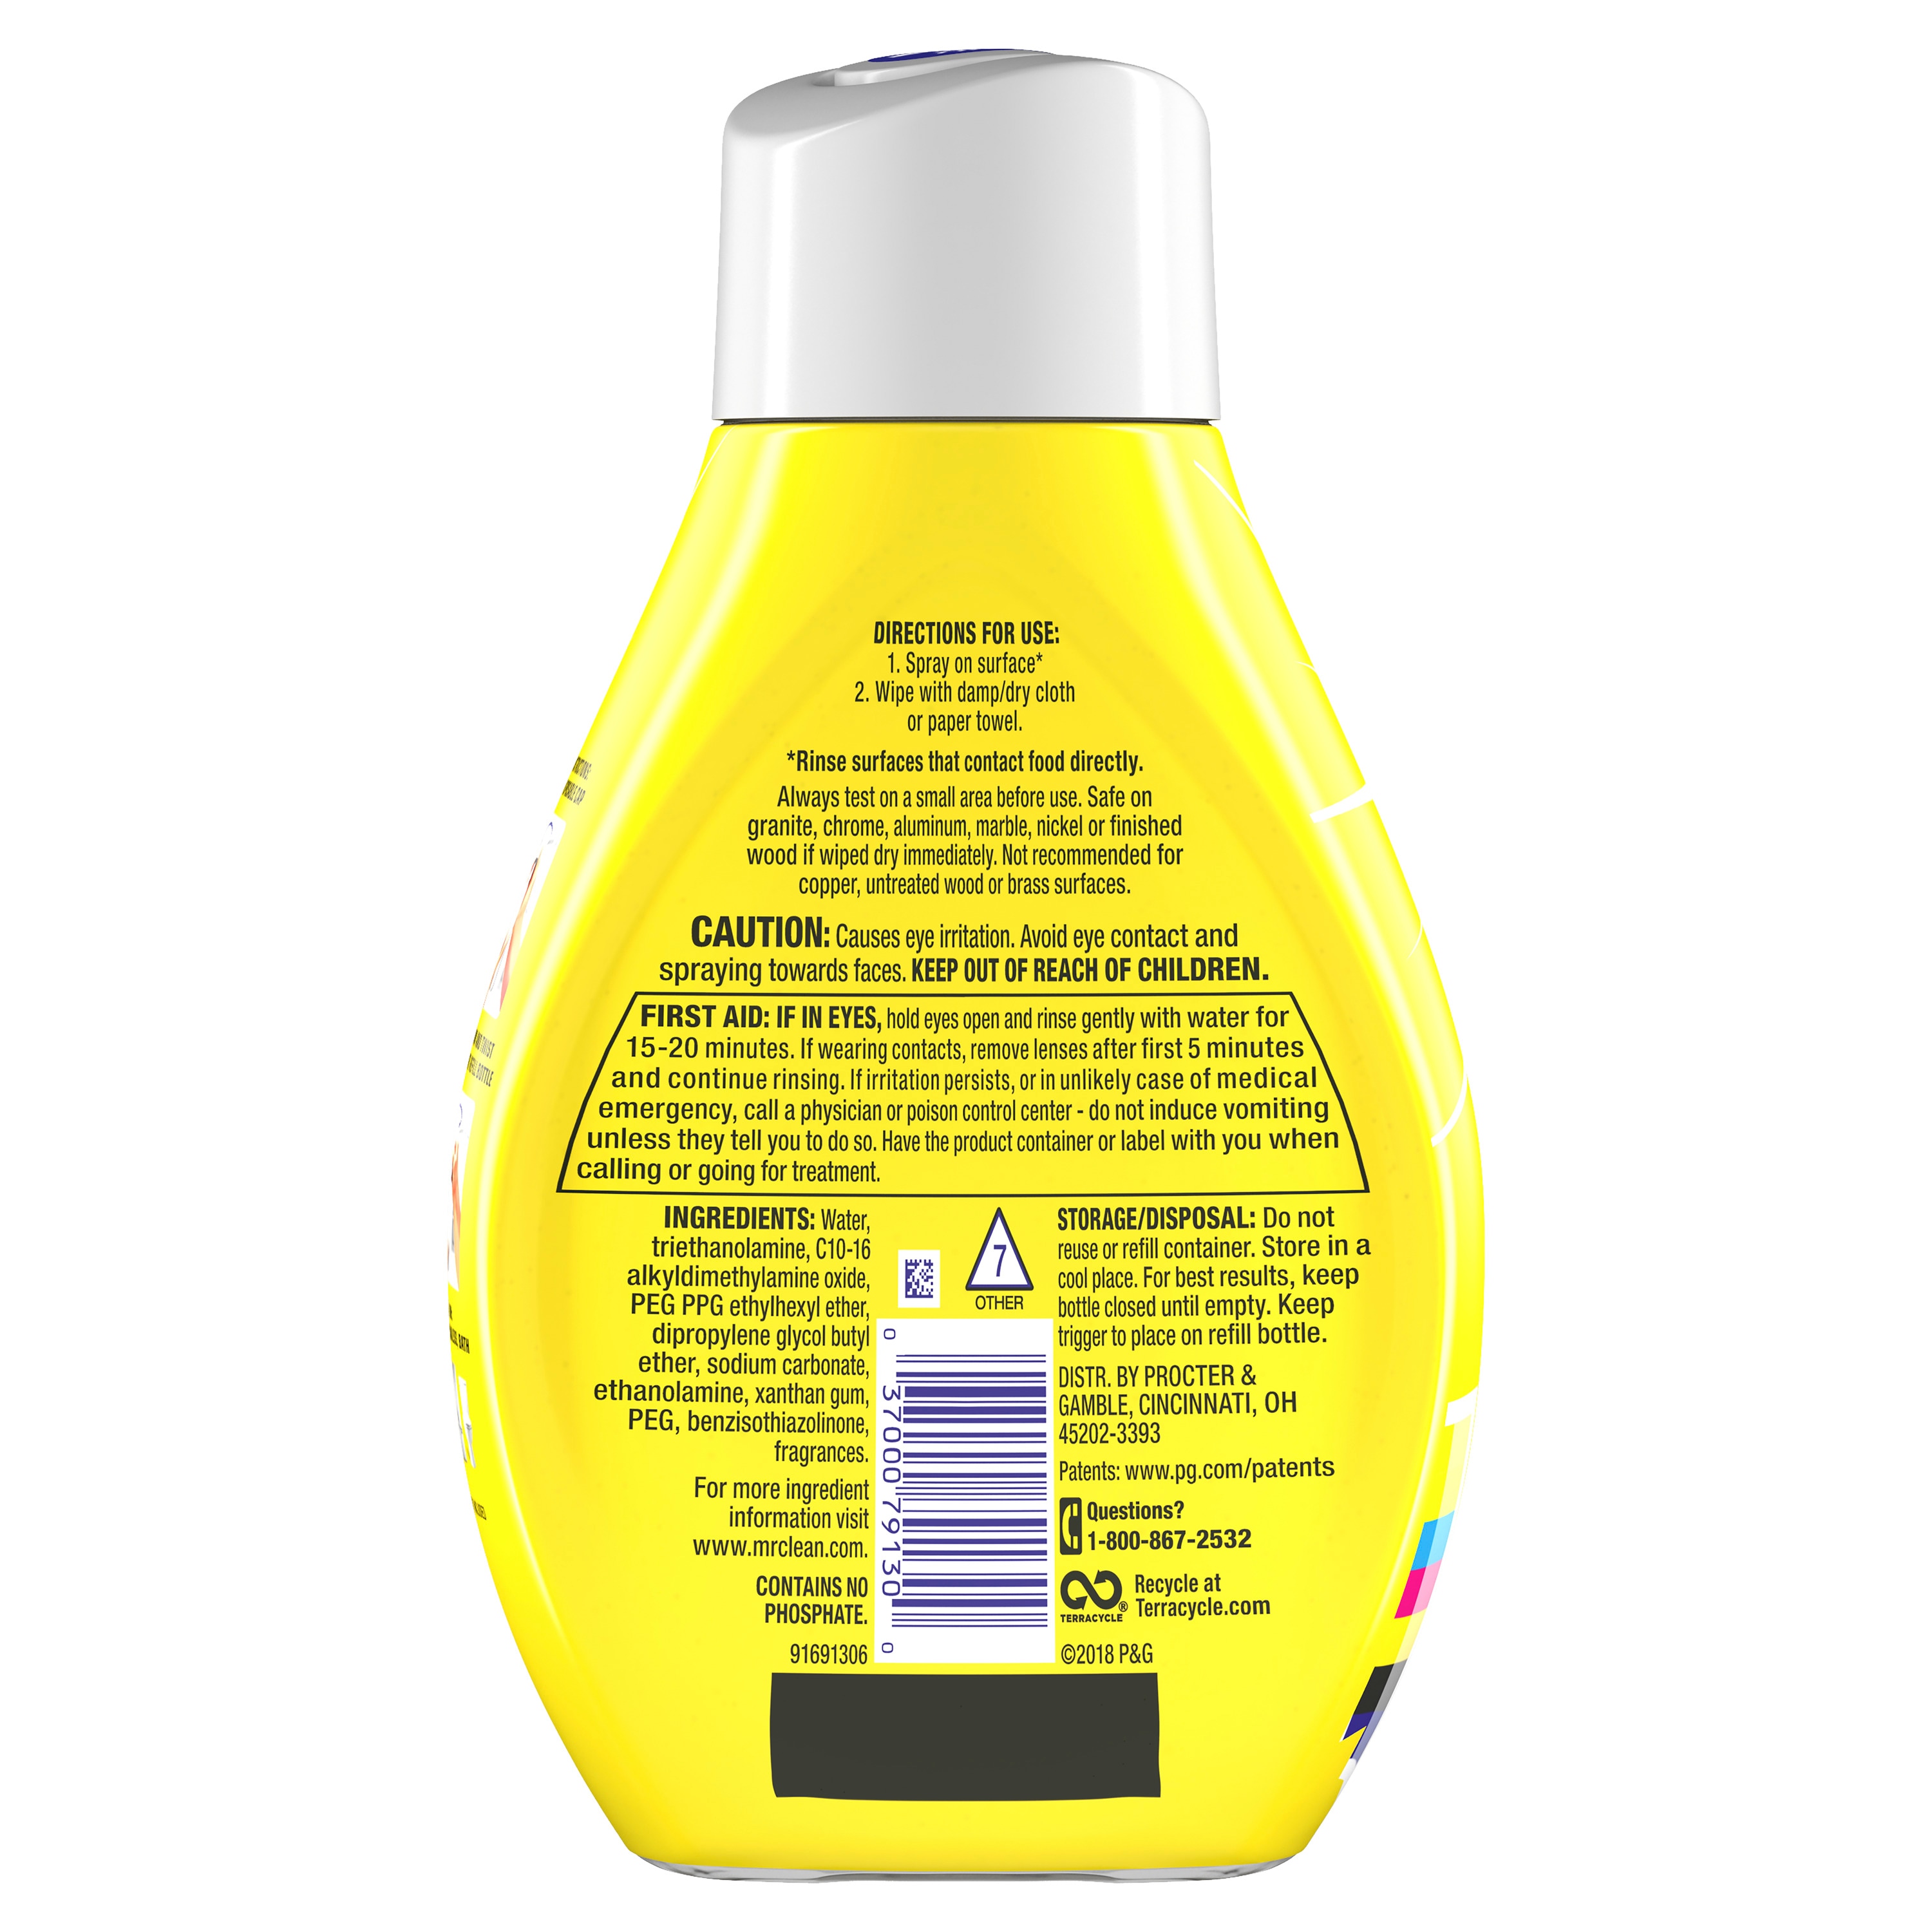 Mr. Clean Clean Freak Deep Cleaning Mist Multi-Surface Spray, Lemon Zest,  16 oz Spray Bottle Plus 30.9 oz Refill